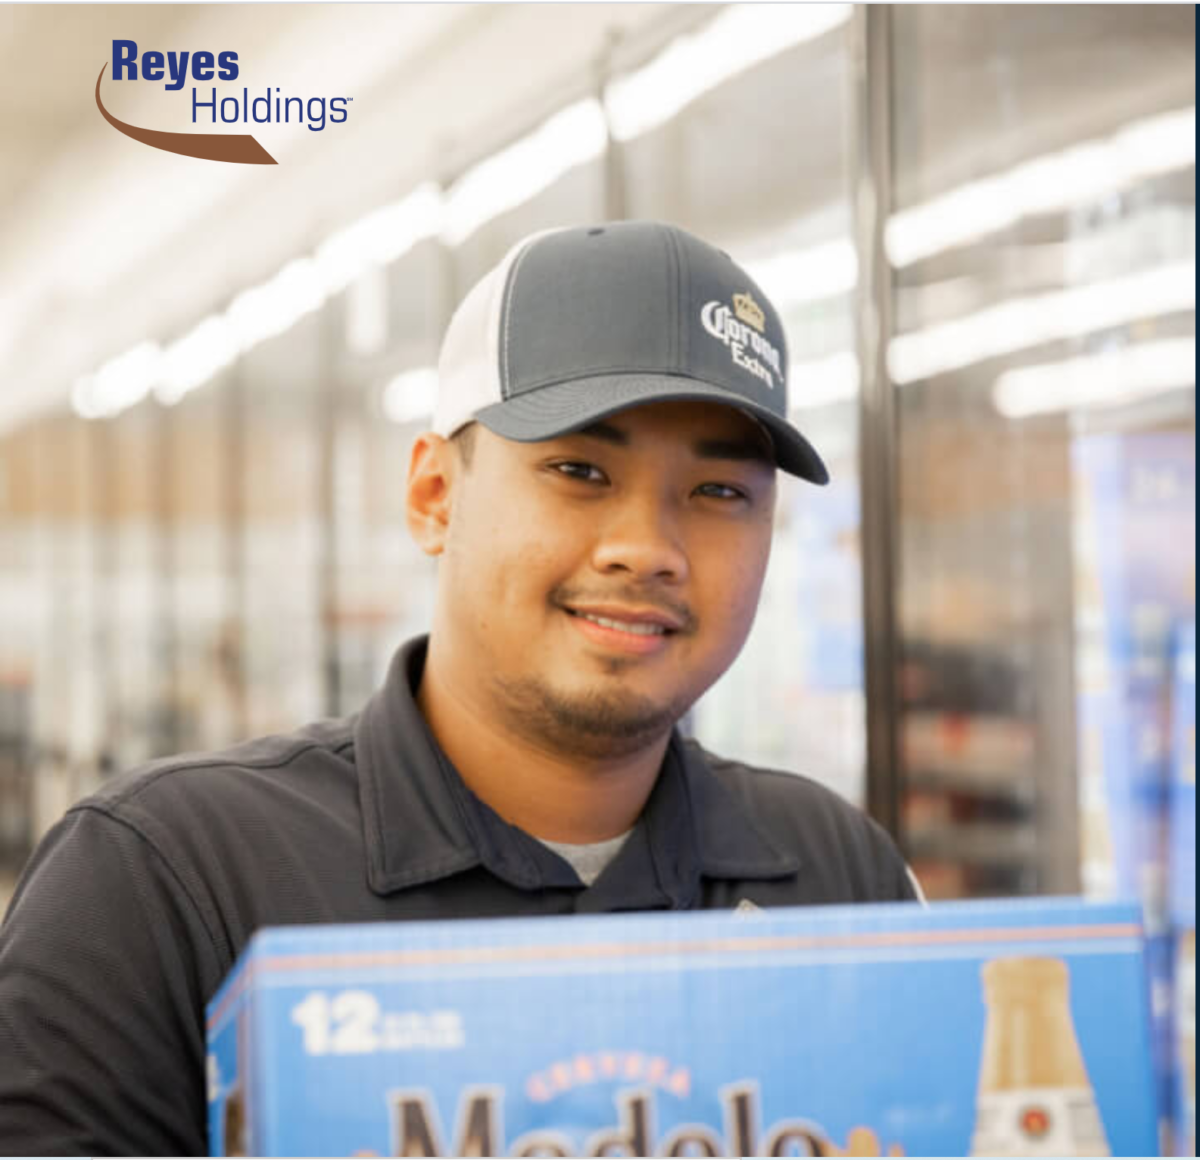 Reyes Holdings - Ultipro Login for Reyes employee Self-Service Portal